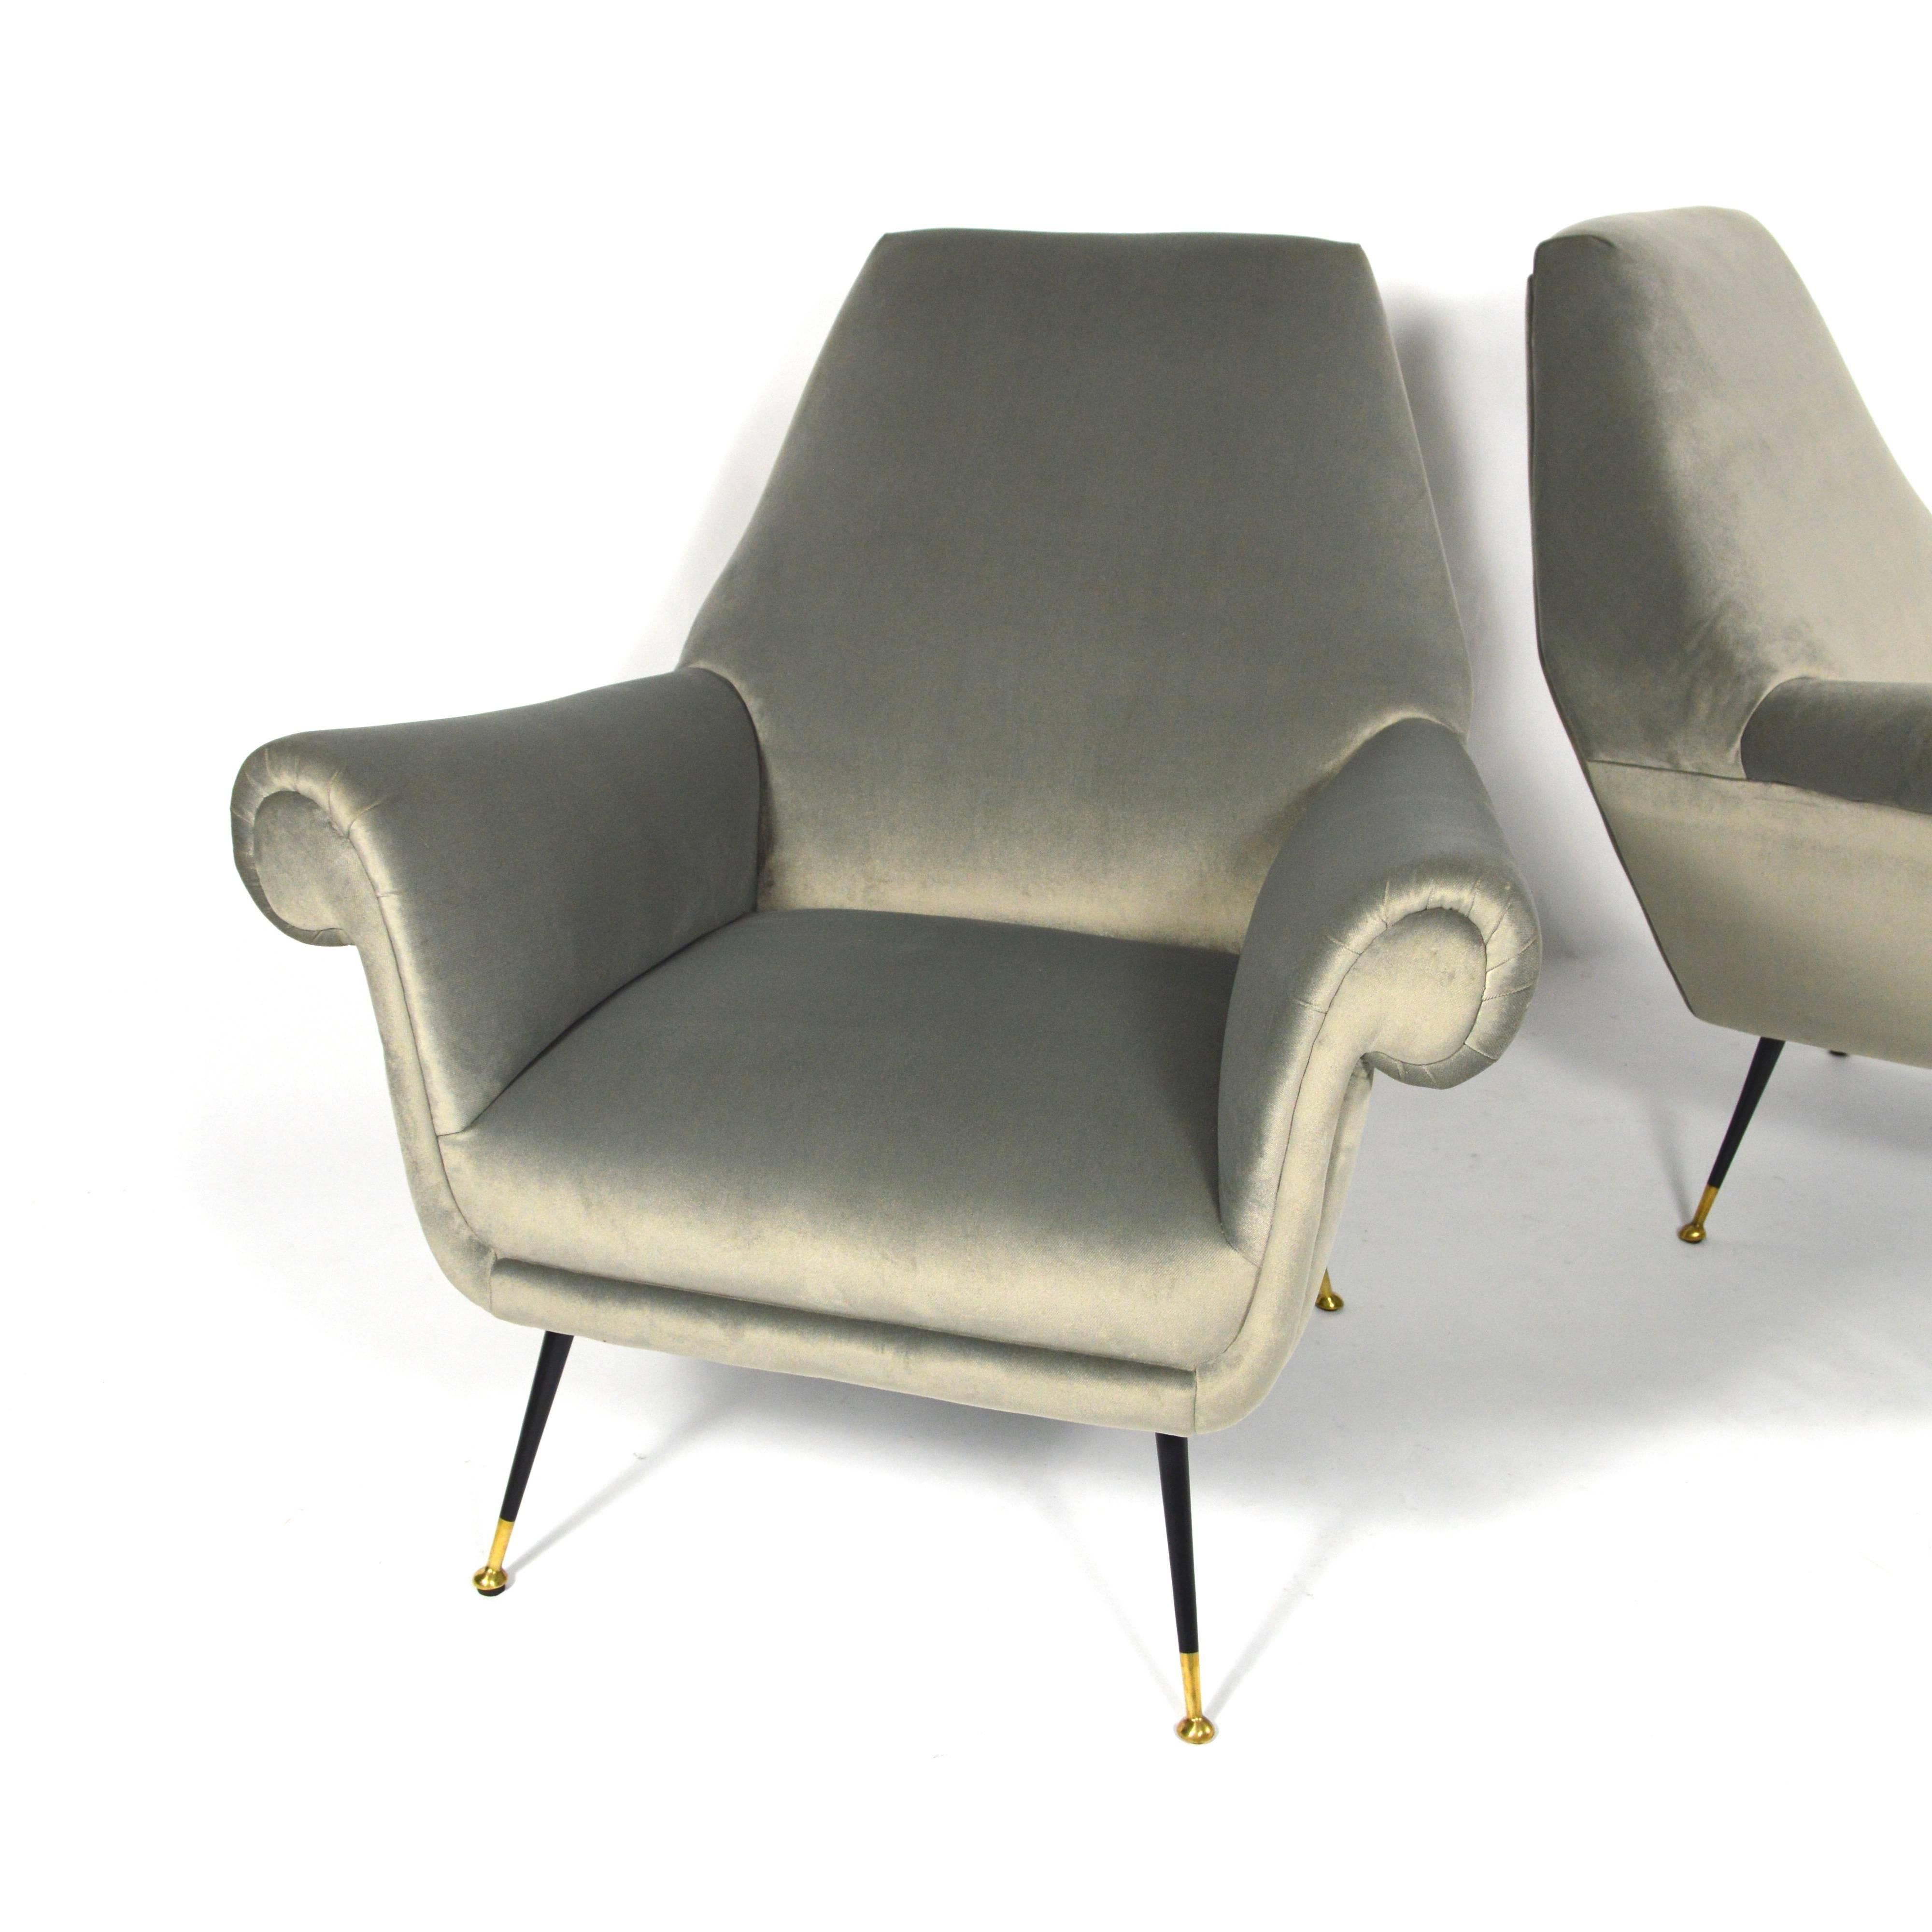 Mid-20th Century Gigi Radice Attributed Club Lounge Chairs, Italy, 1950s